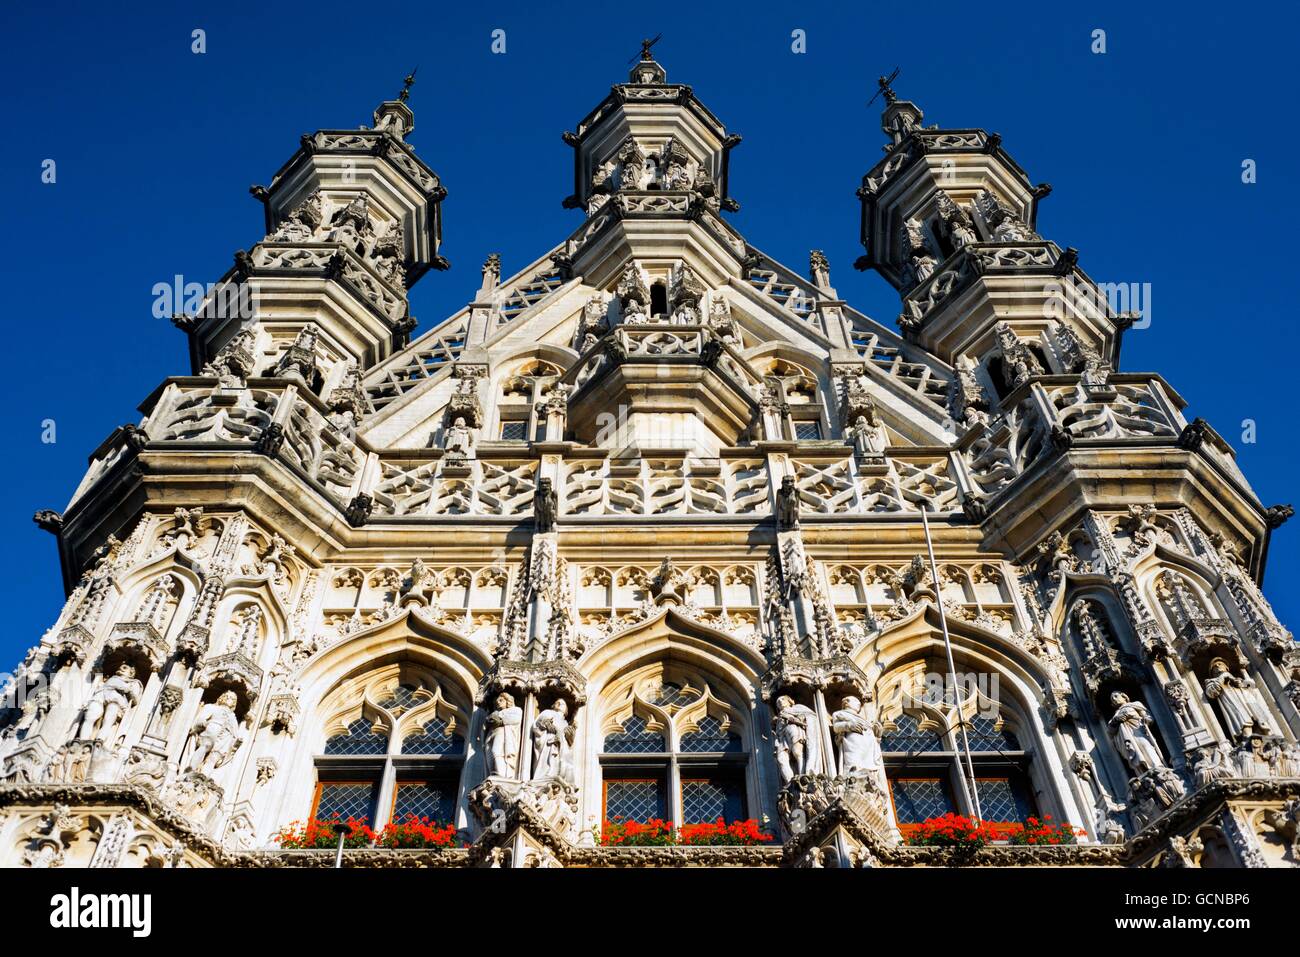 El ayuntamiento de estilo gótico en Brabantine estilo gótico tardío en la Grote Markt / Main Market Square, Lovaina / Louvain, Bélgica. Lovaina Foto de stock